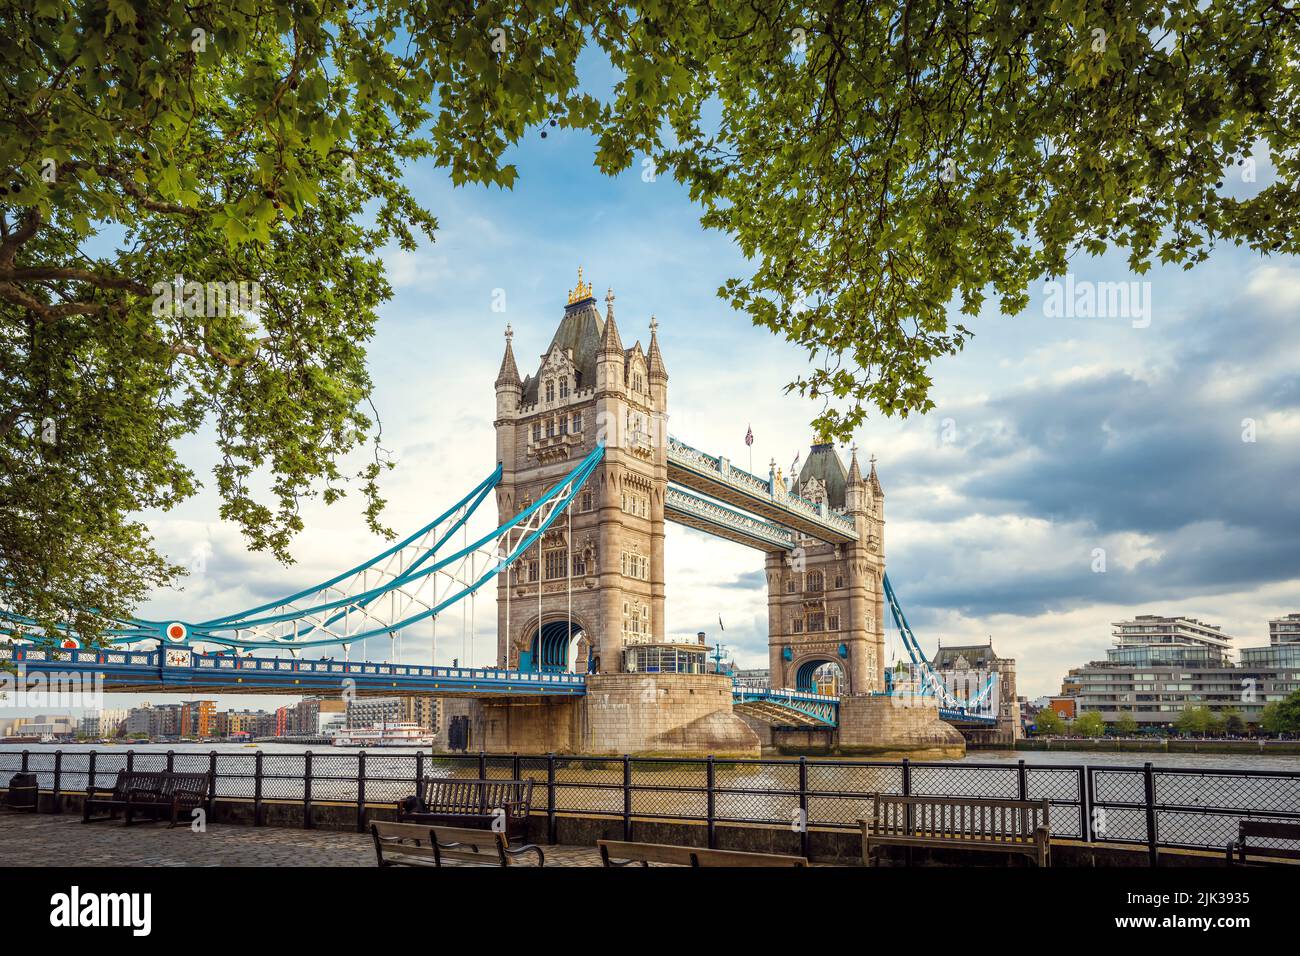 Die berühmte Tower Bridge von london Stockfoto